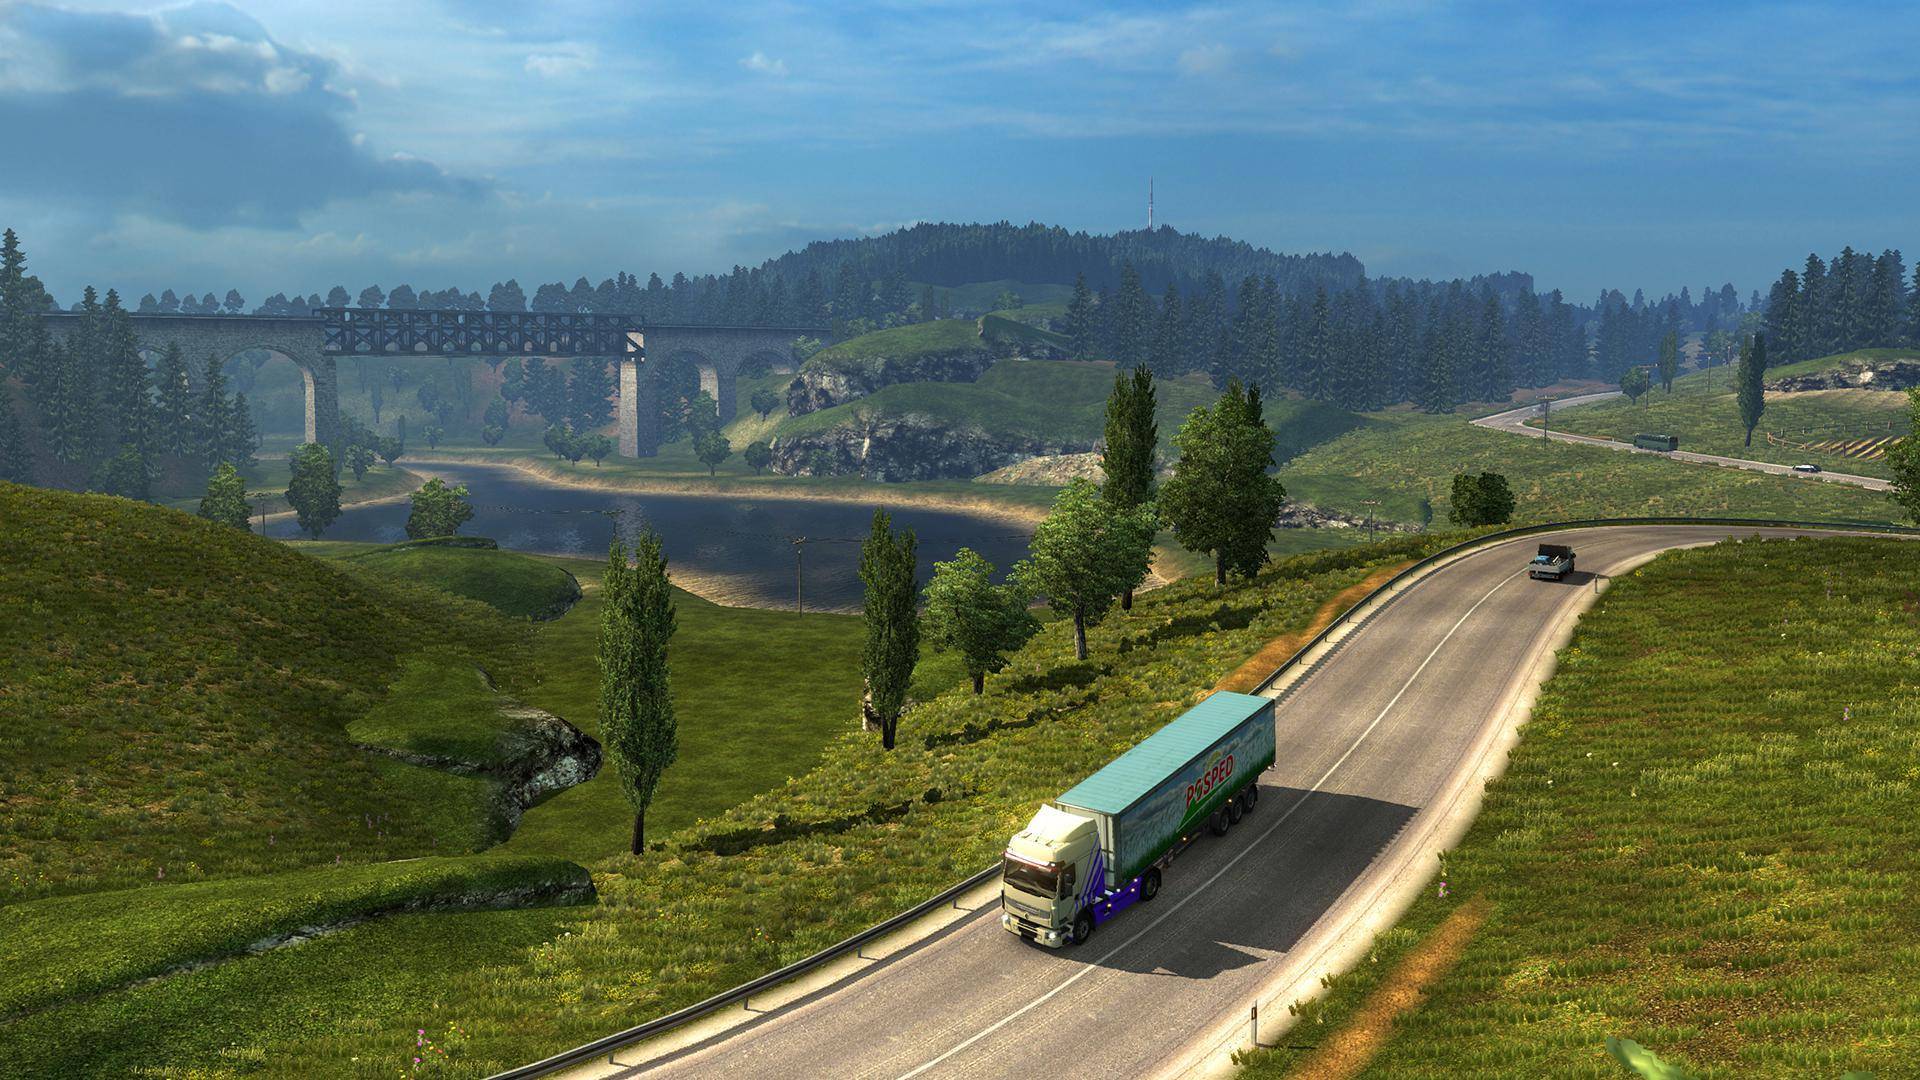 Euro Truck Simulator 2 - Legendary Edition